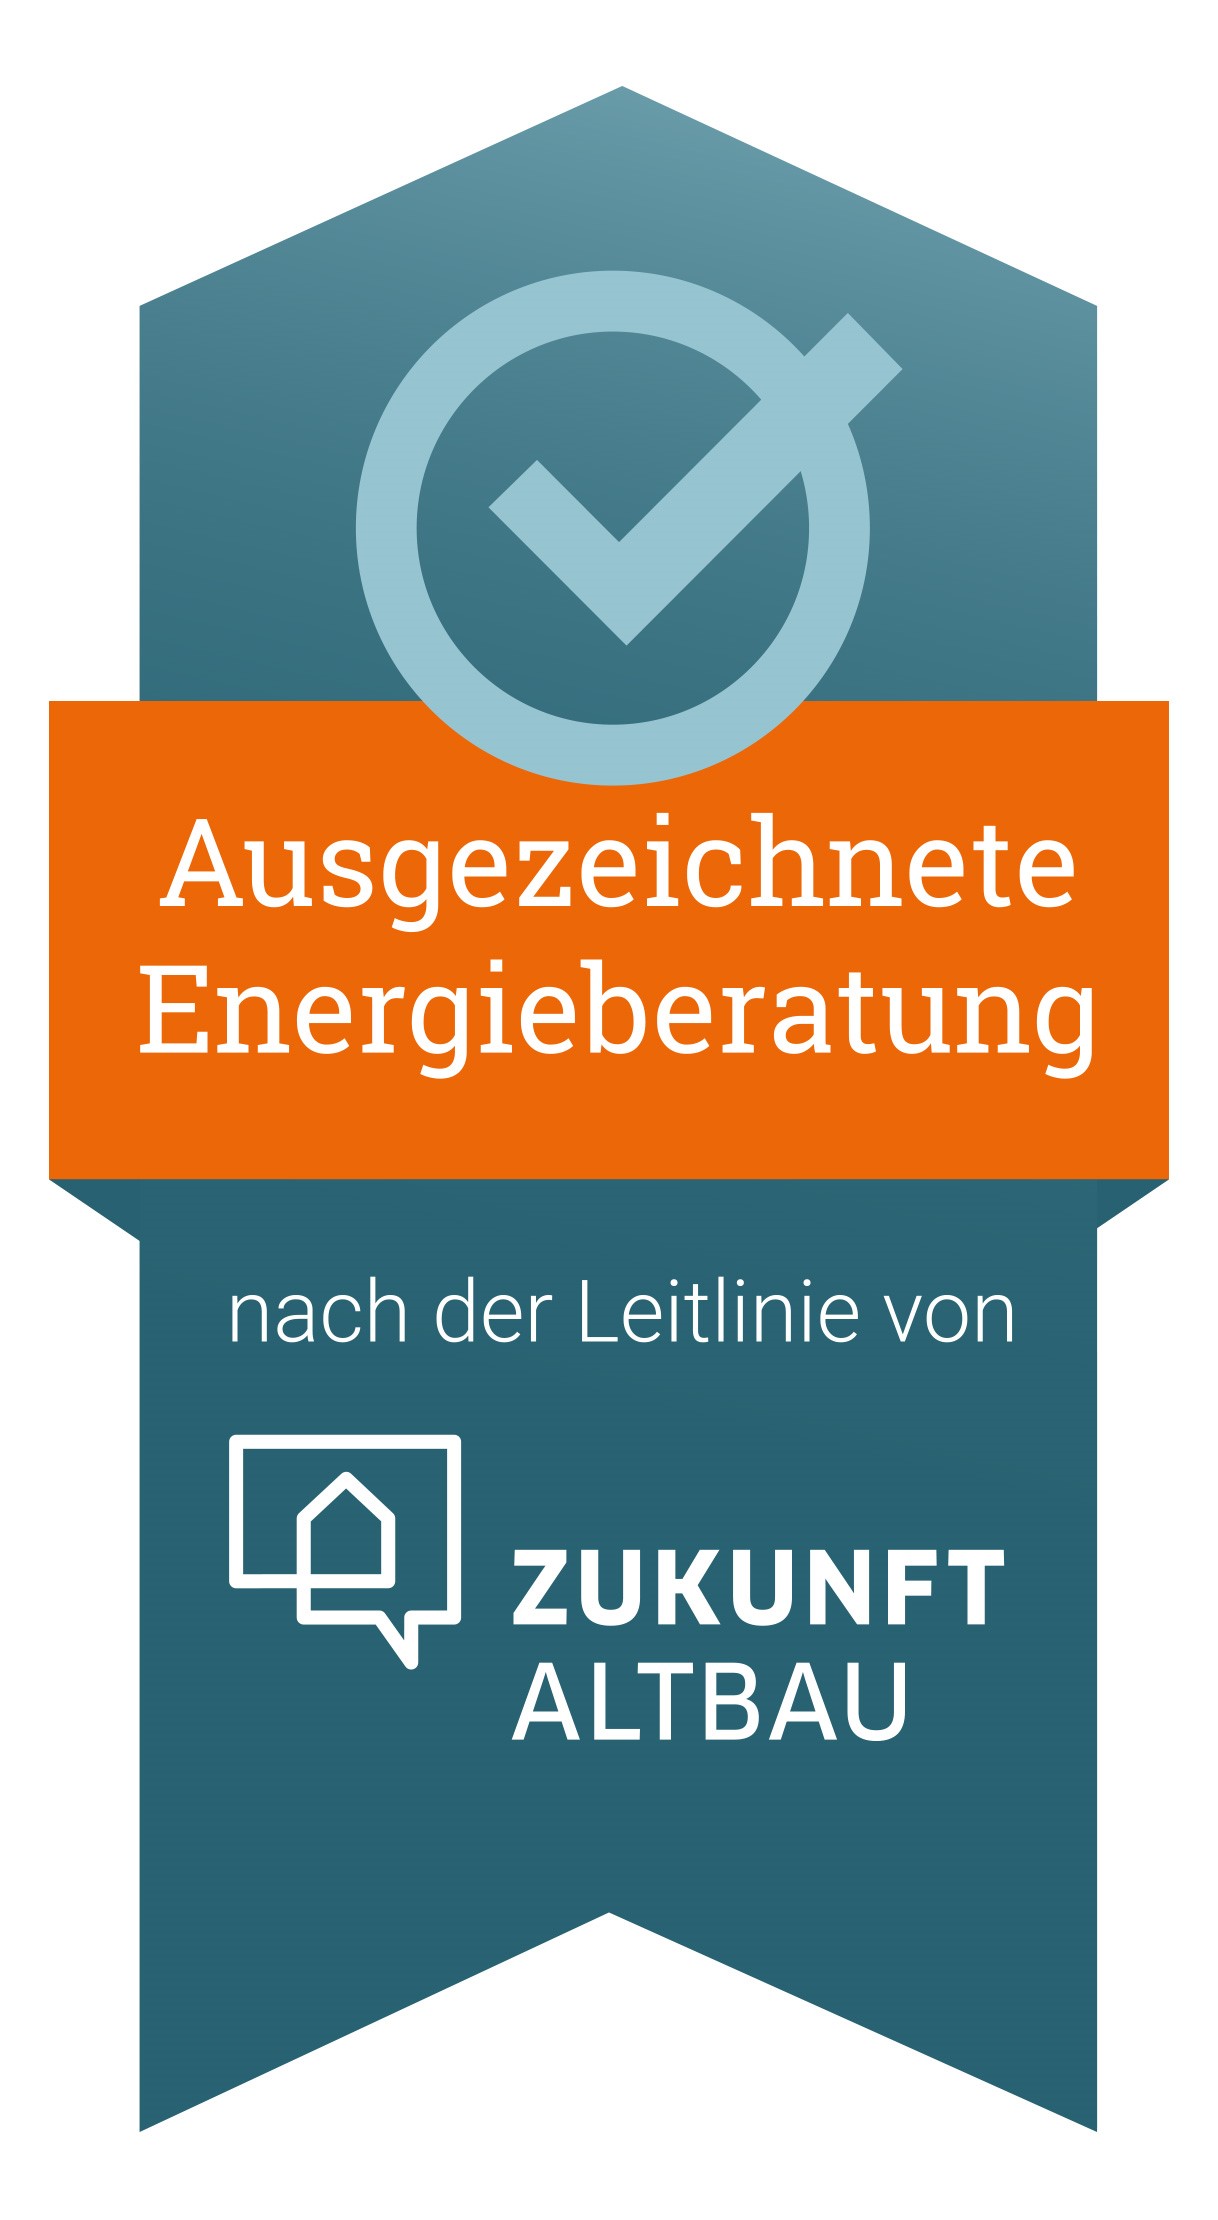 Energie & Haus 24 ® Miltenberg